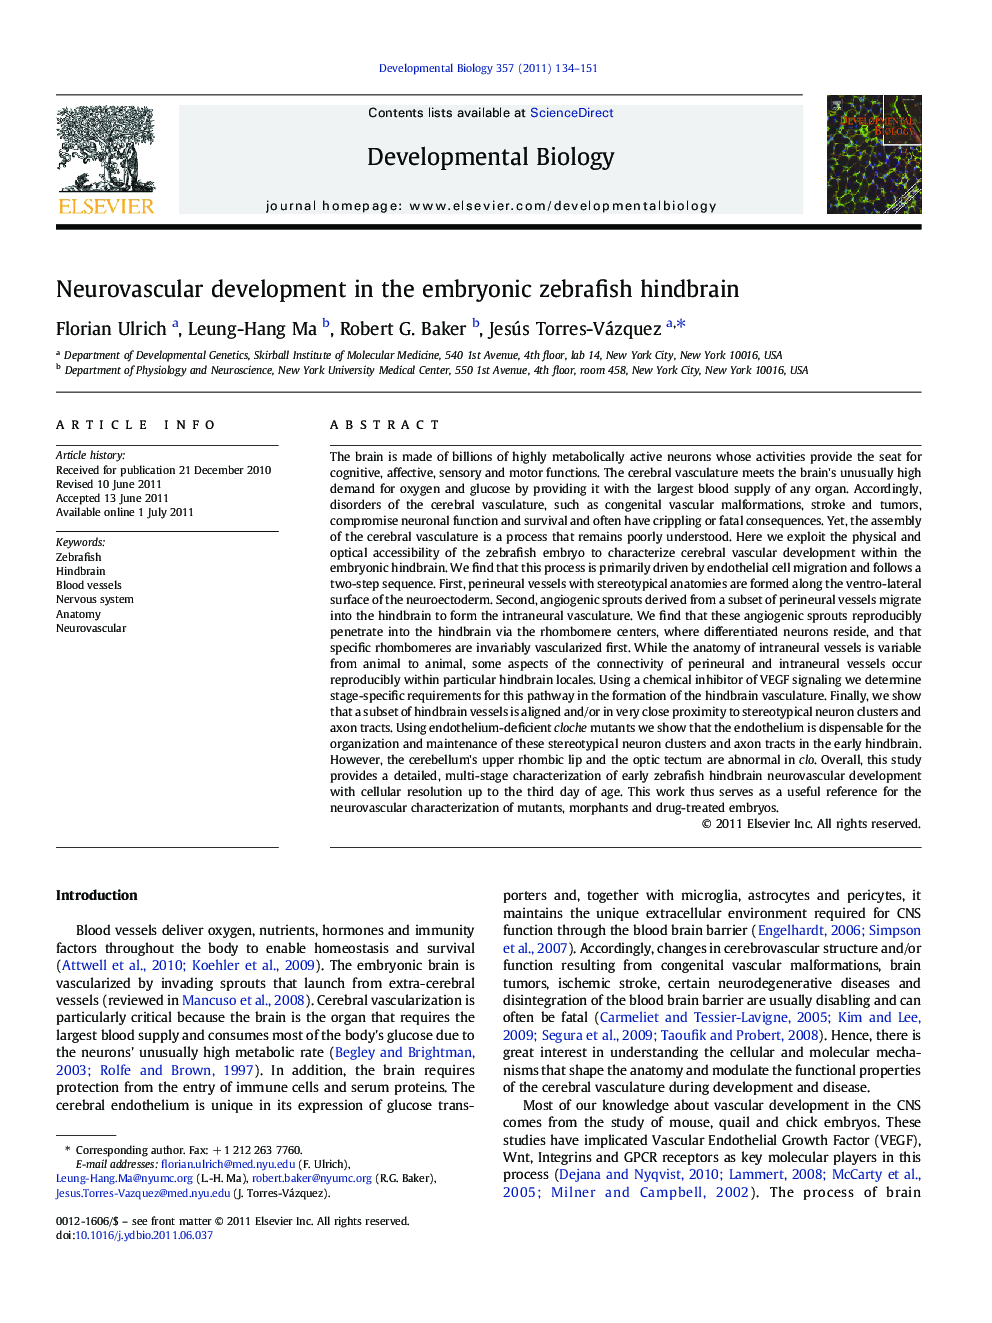 Neurovascular development in the embryonic zebrafish hindbrain